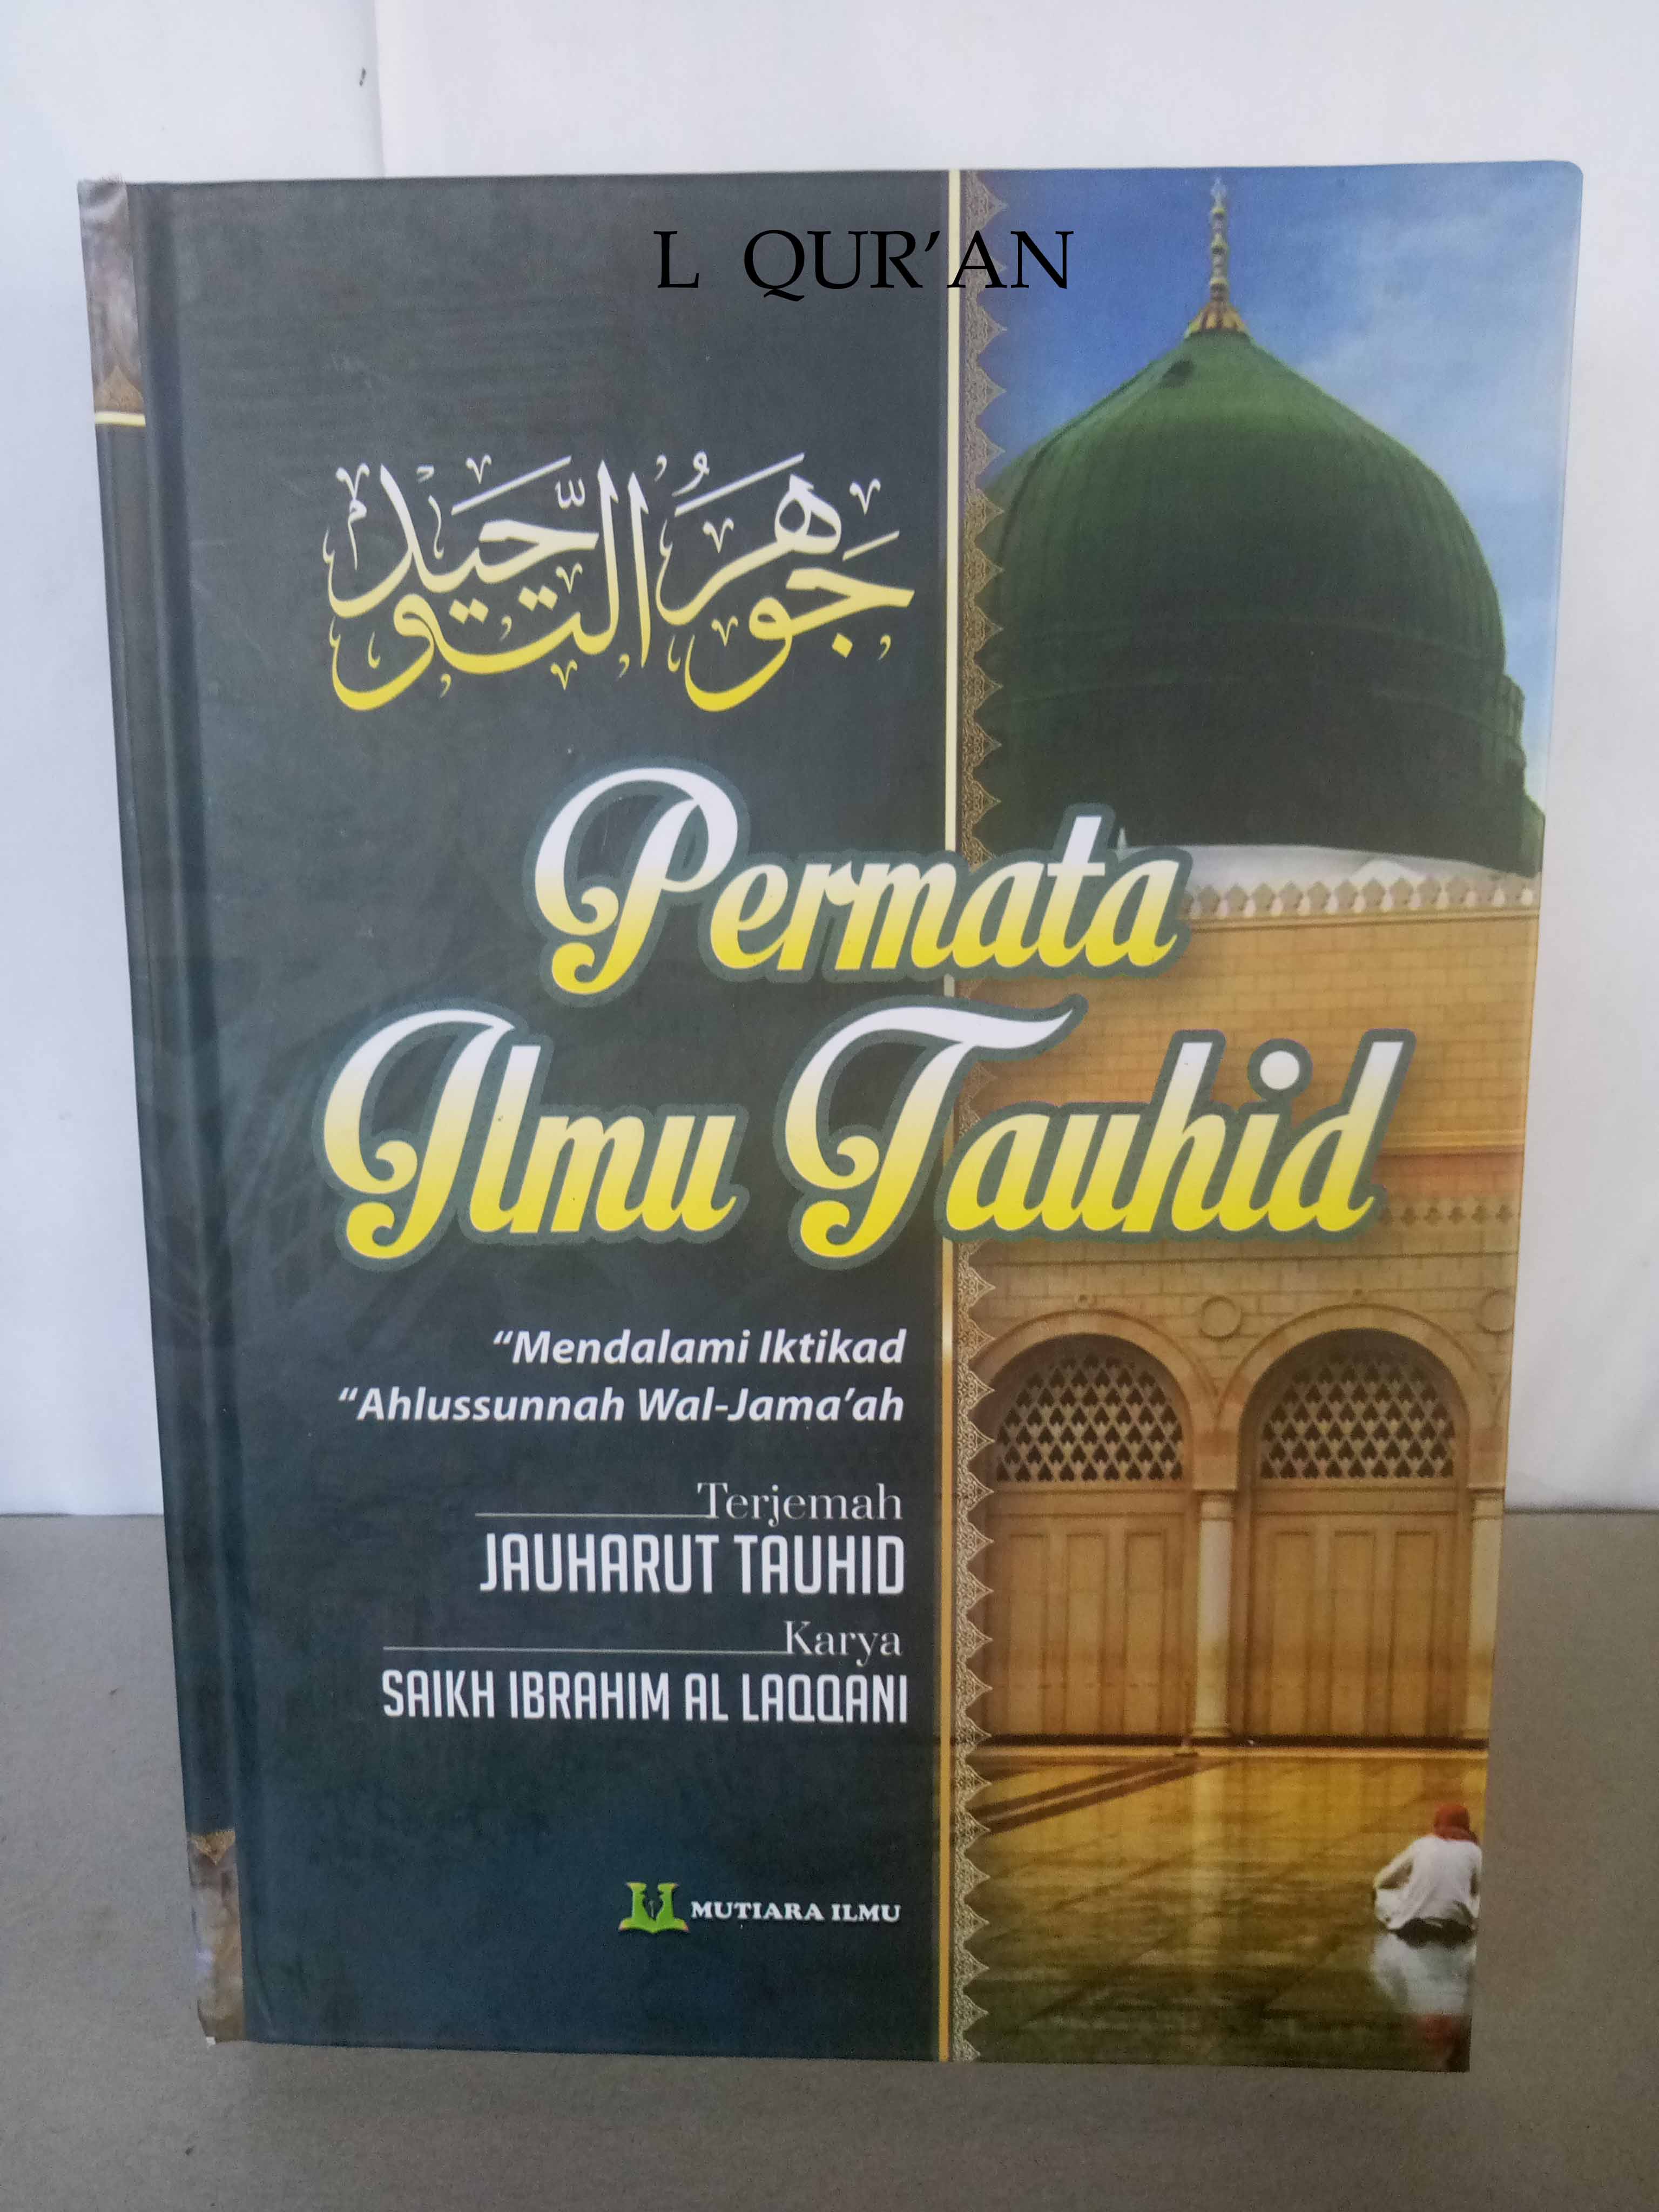 Terjemahan Kitab Tuhfatul Murid Pdf - Free Download Terjemah PDF